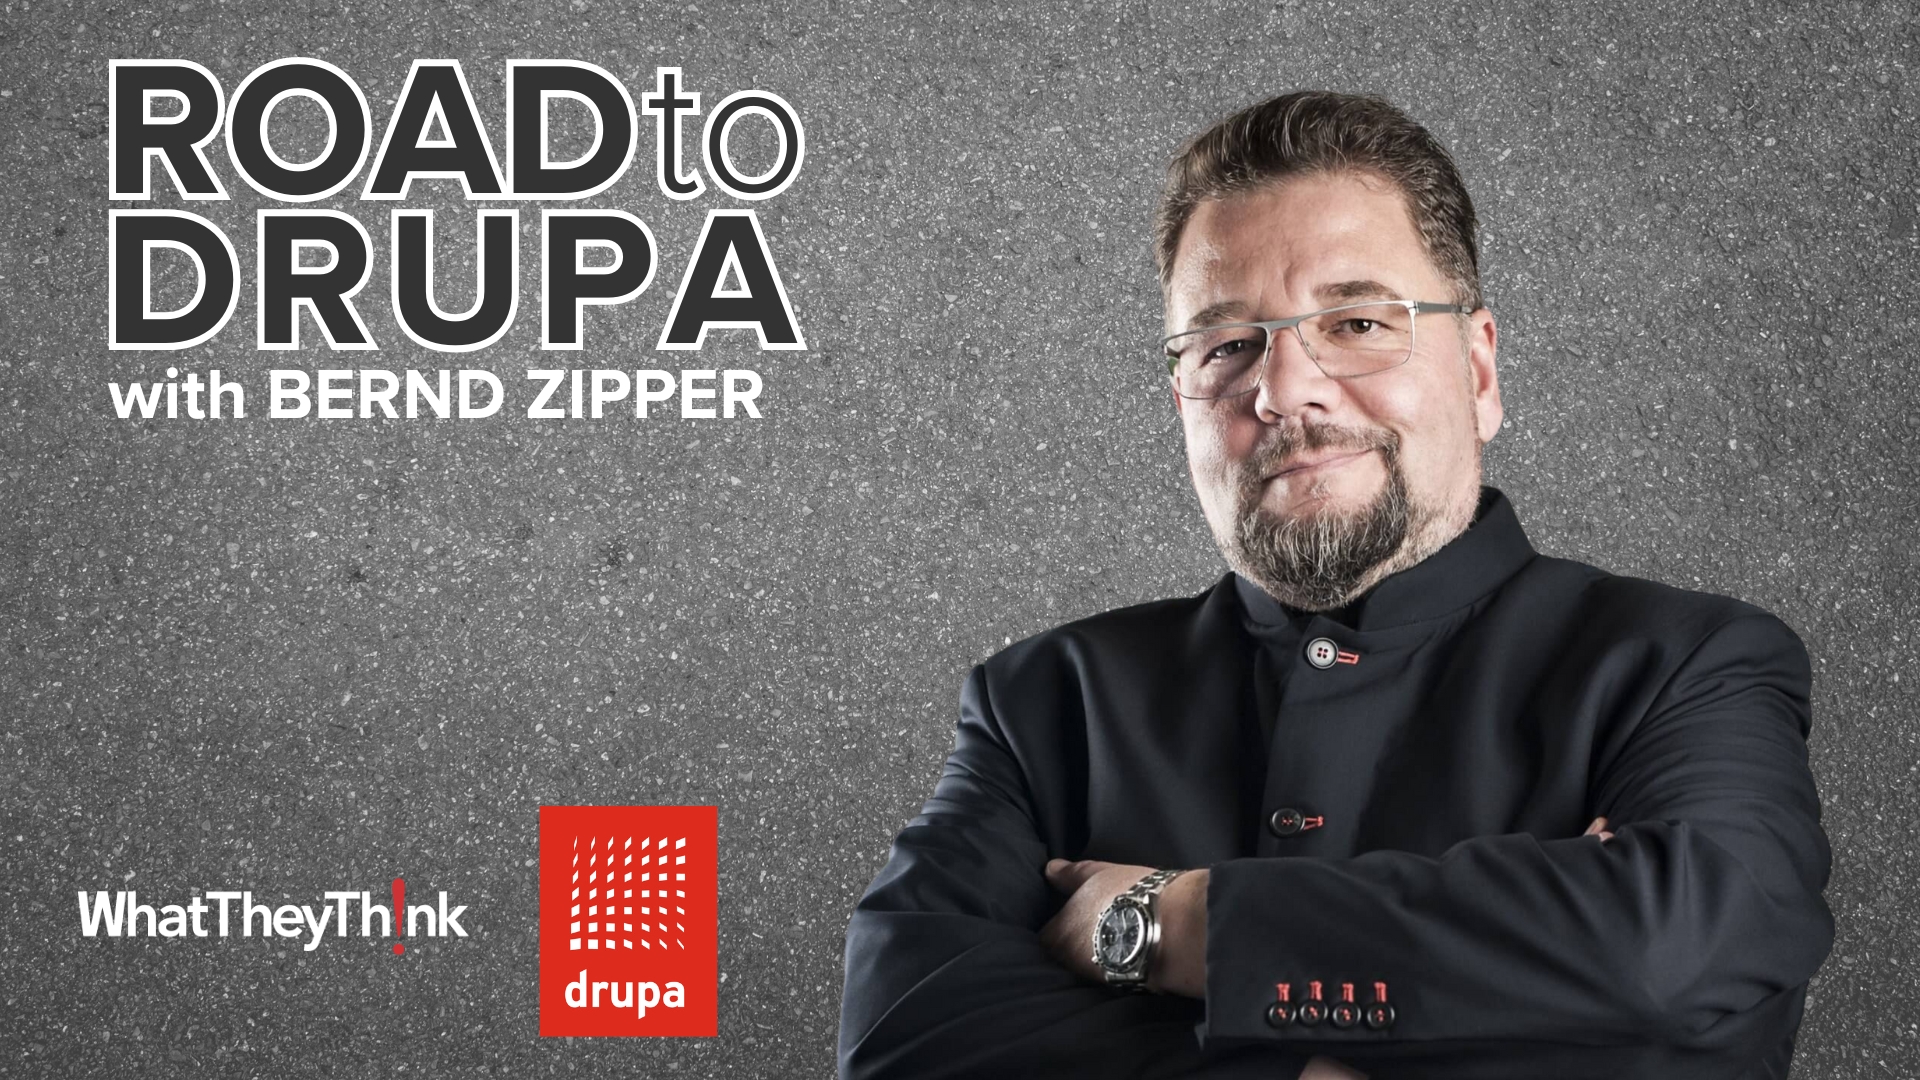 Road to drupa: Zipcon's Bernd Zipper